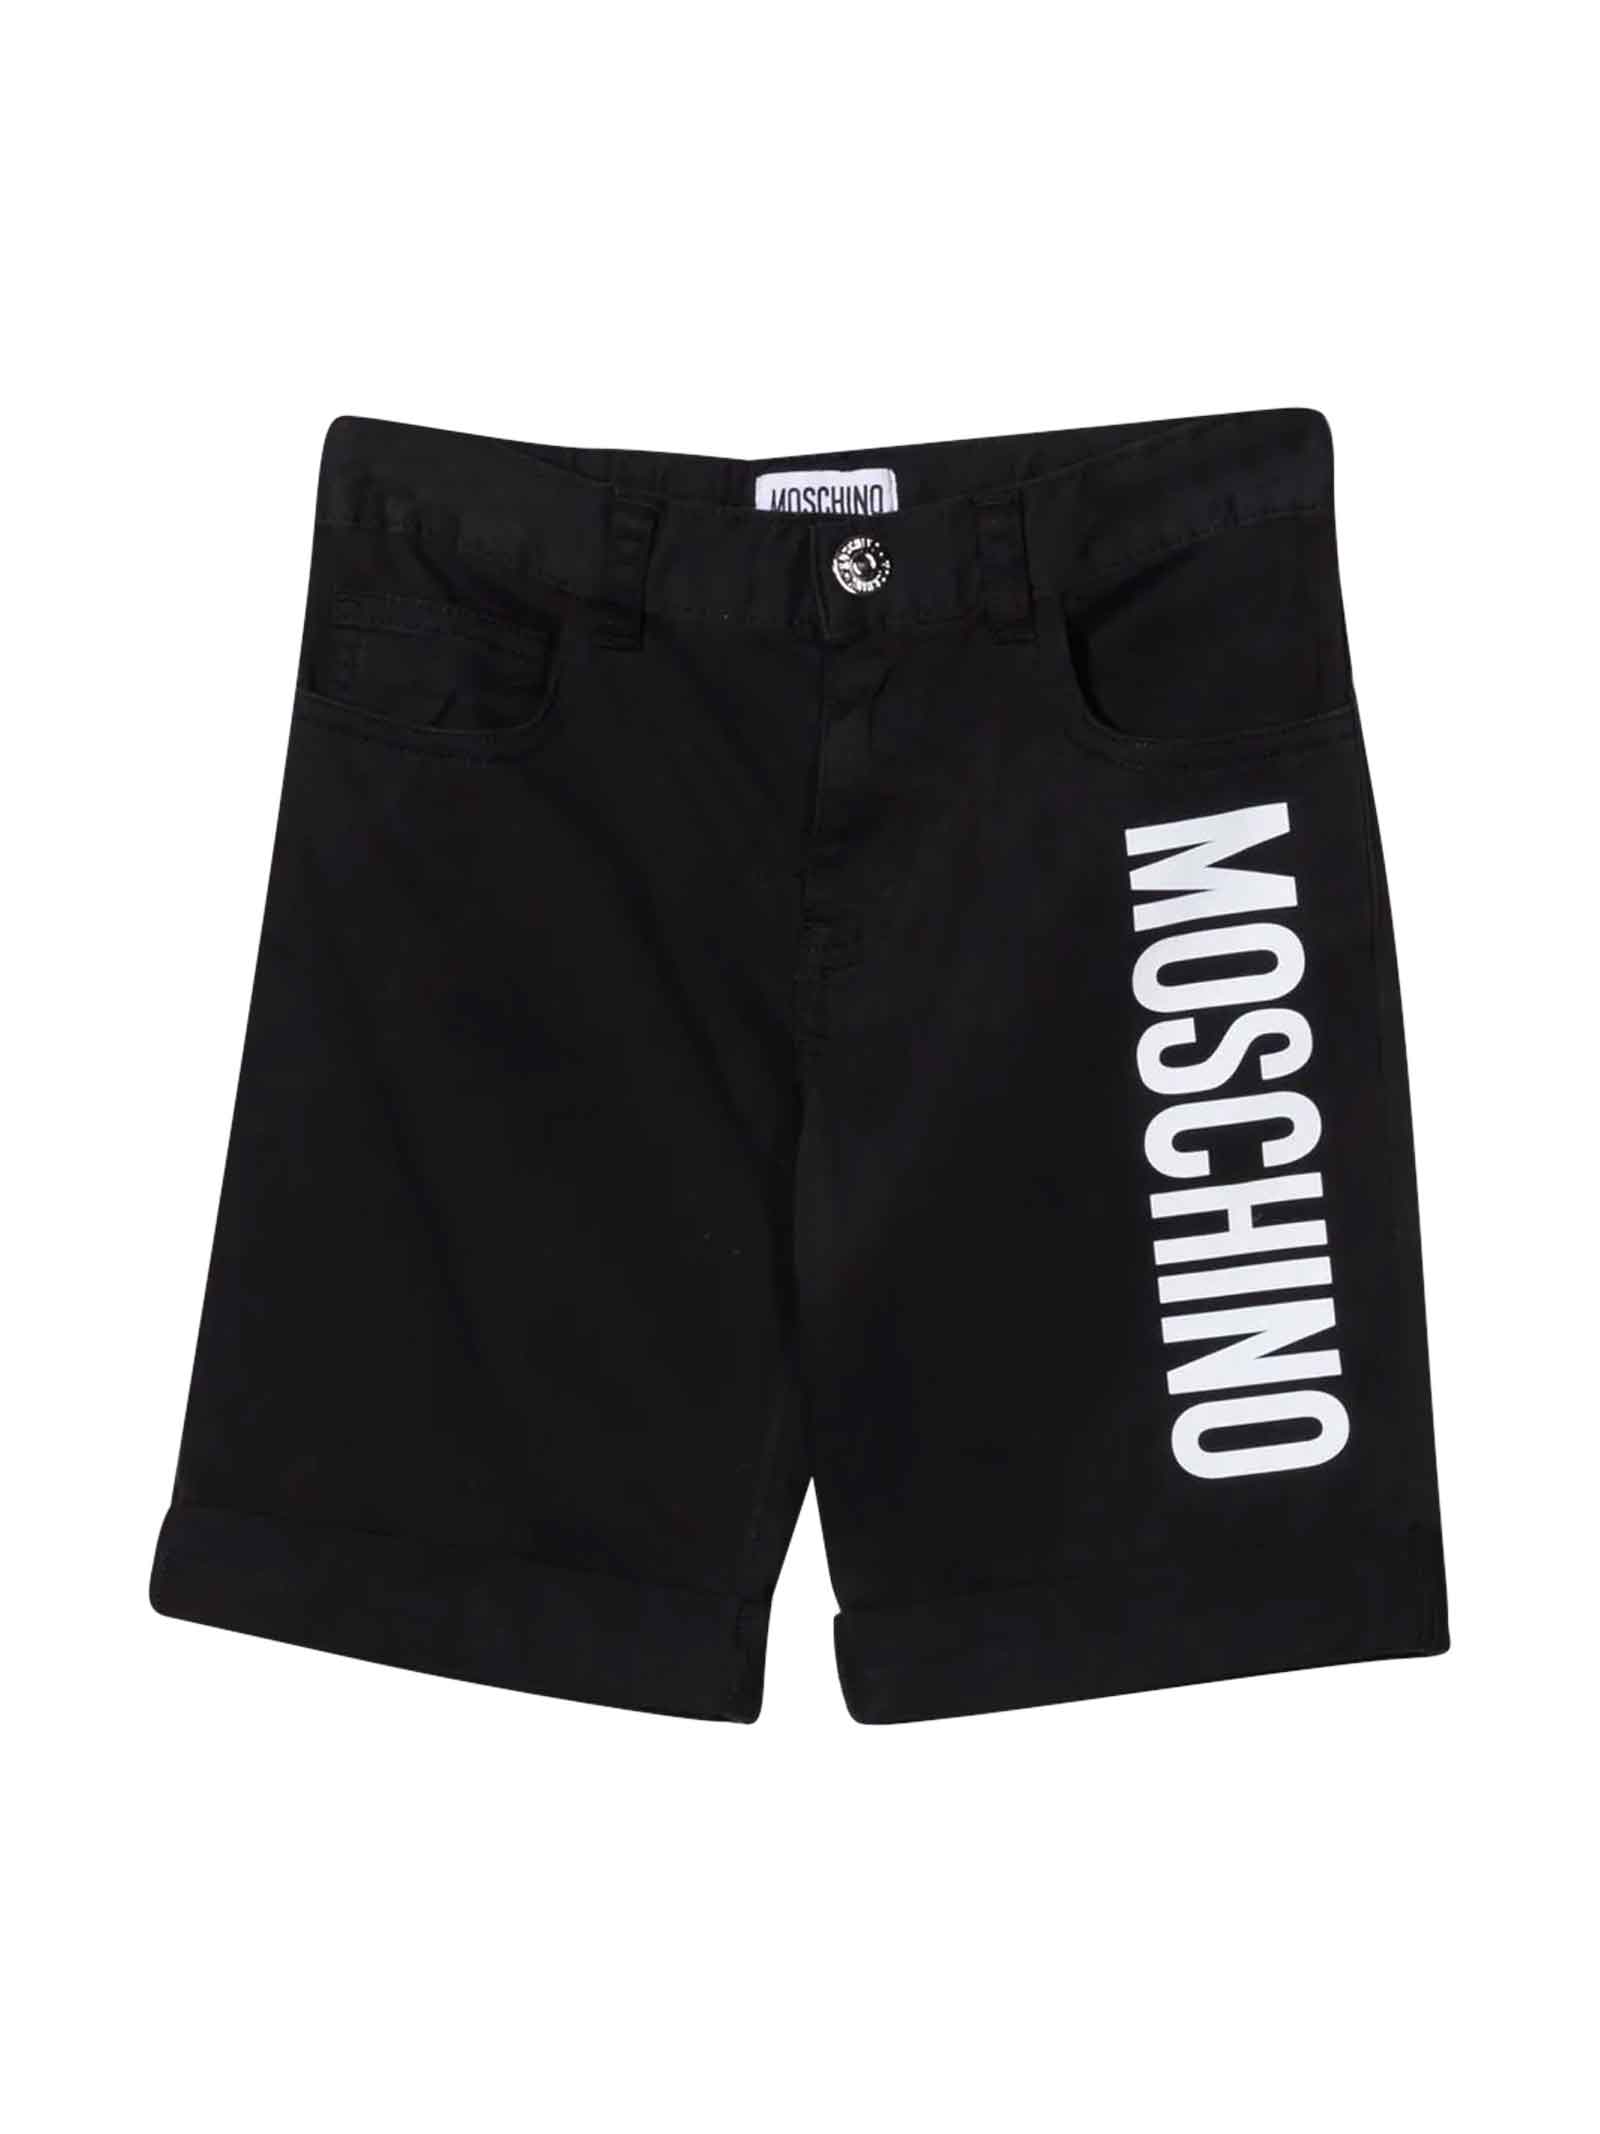 Moschino Unisex Black Shorts